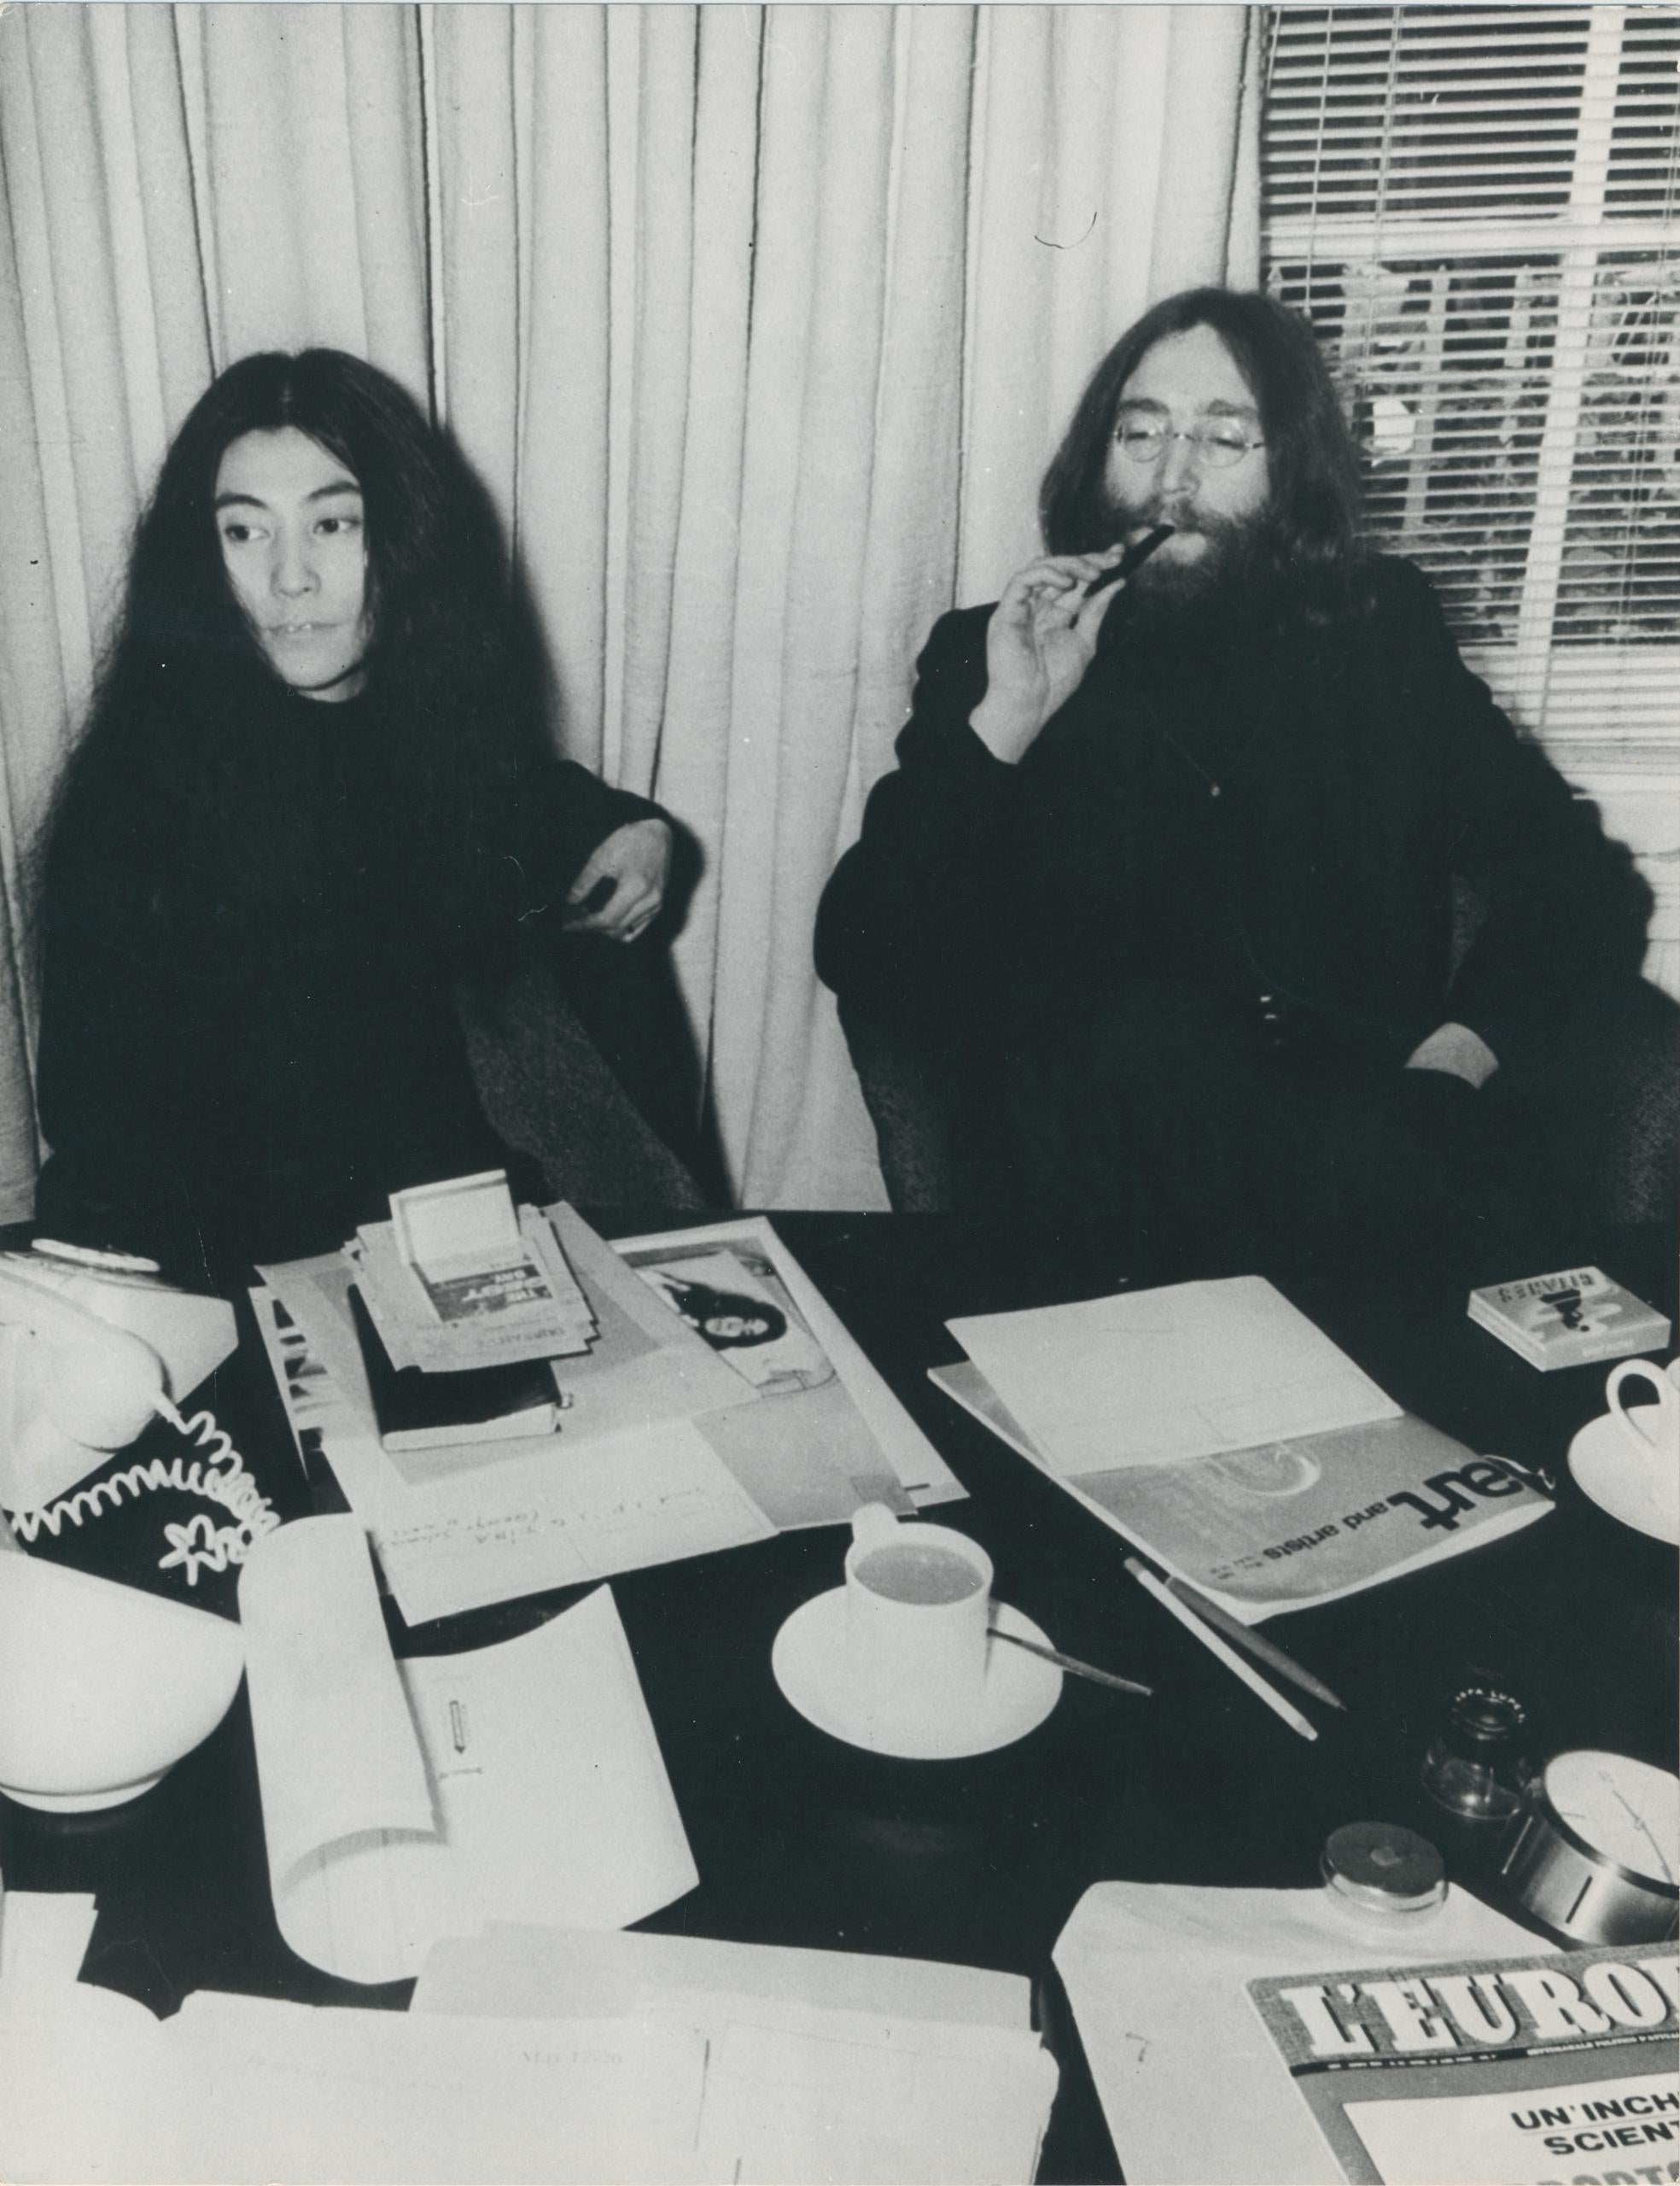 John Lennon and Yoko Ono, Black and White Photography, 1970s, 23, 7 x 17, 7 cm